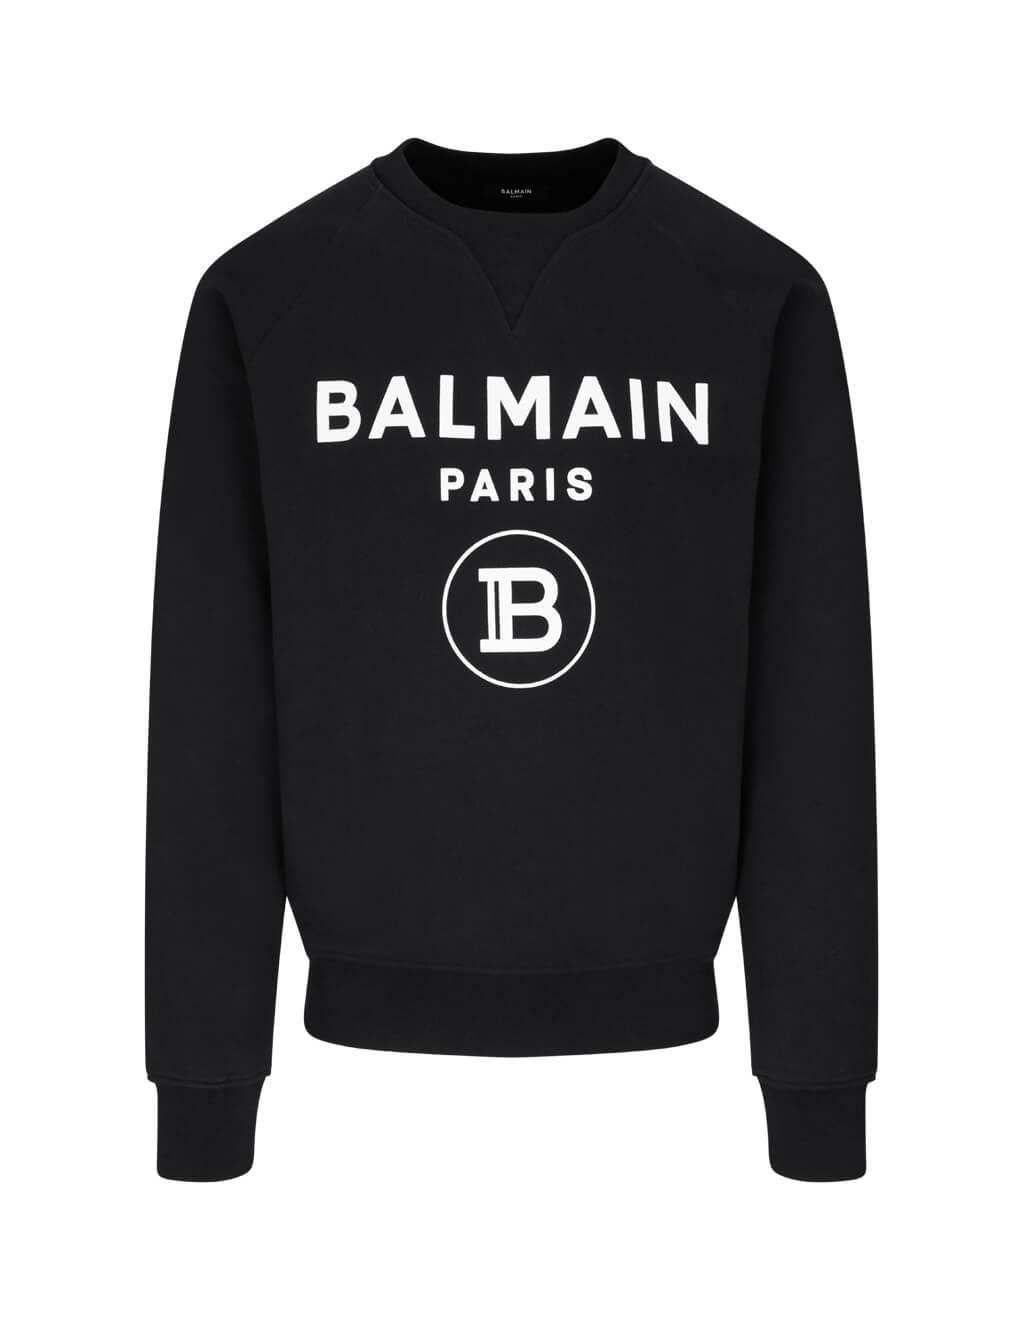 Balmain Wool Logo Sweater in Black for Men - Save 69% - Lyst